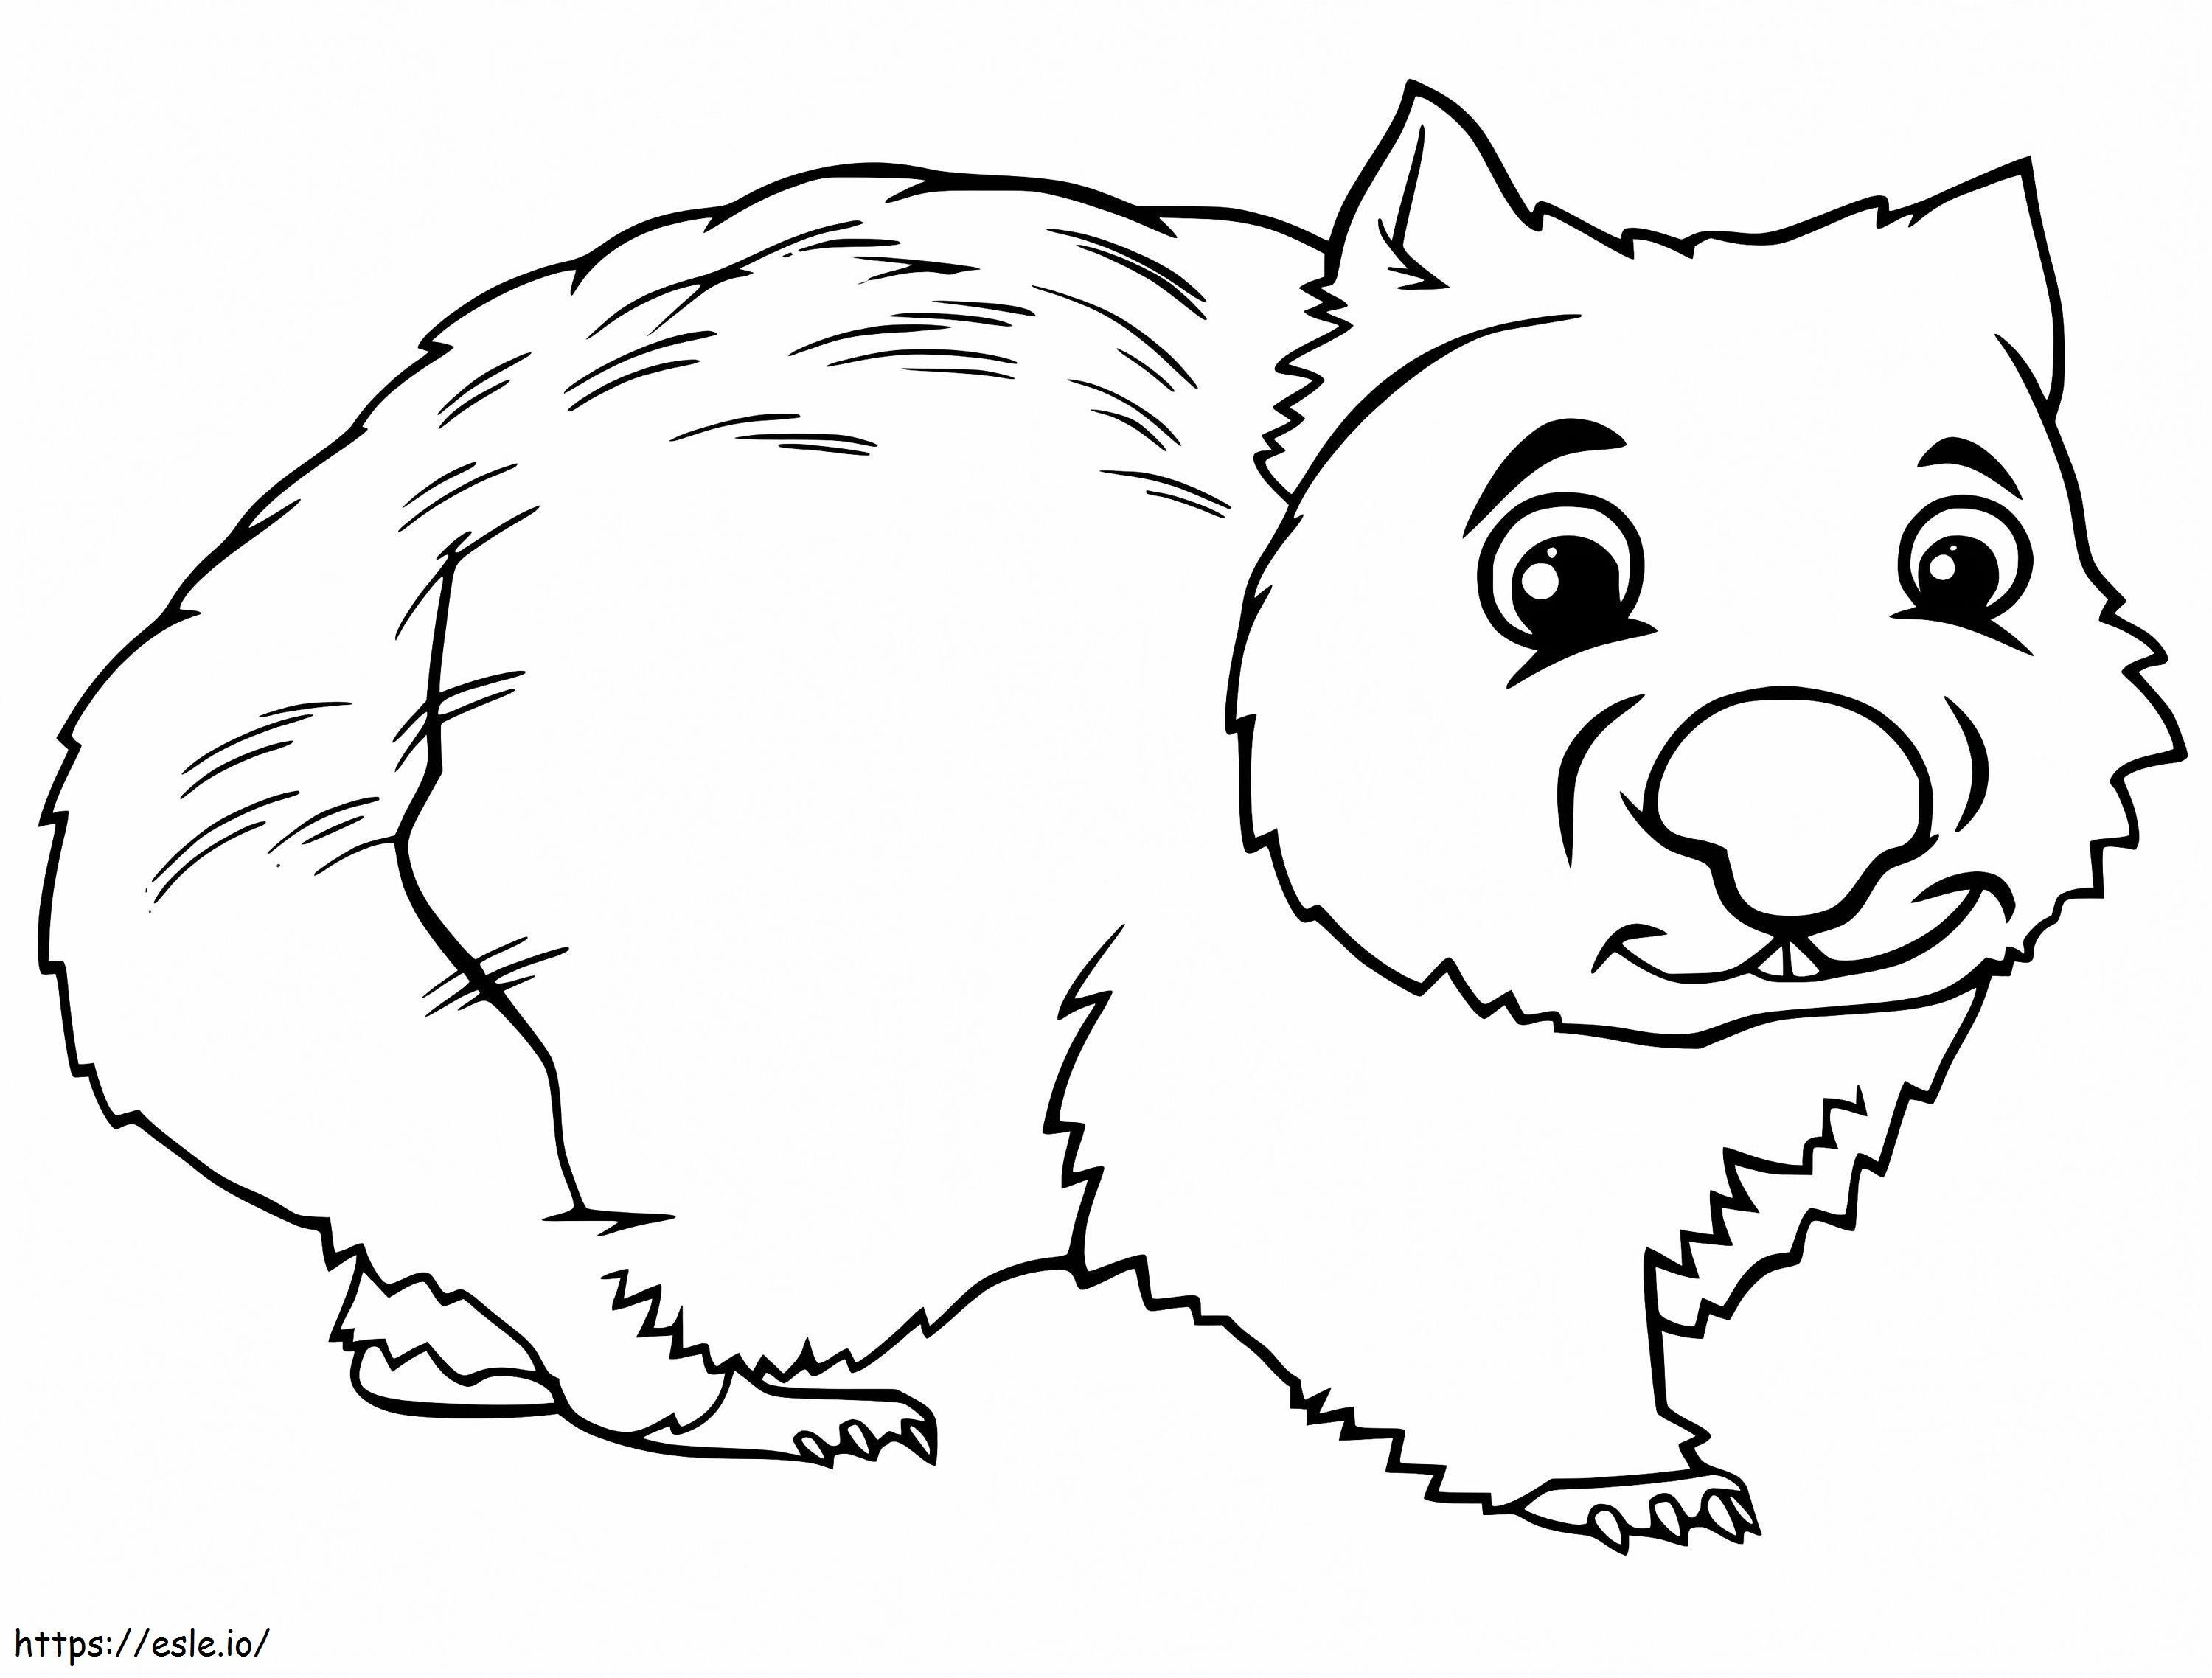 Kreskówka wombat kolorowanka